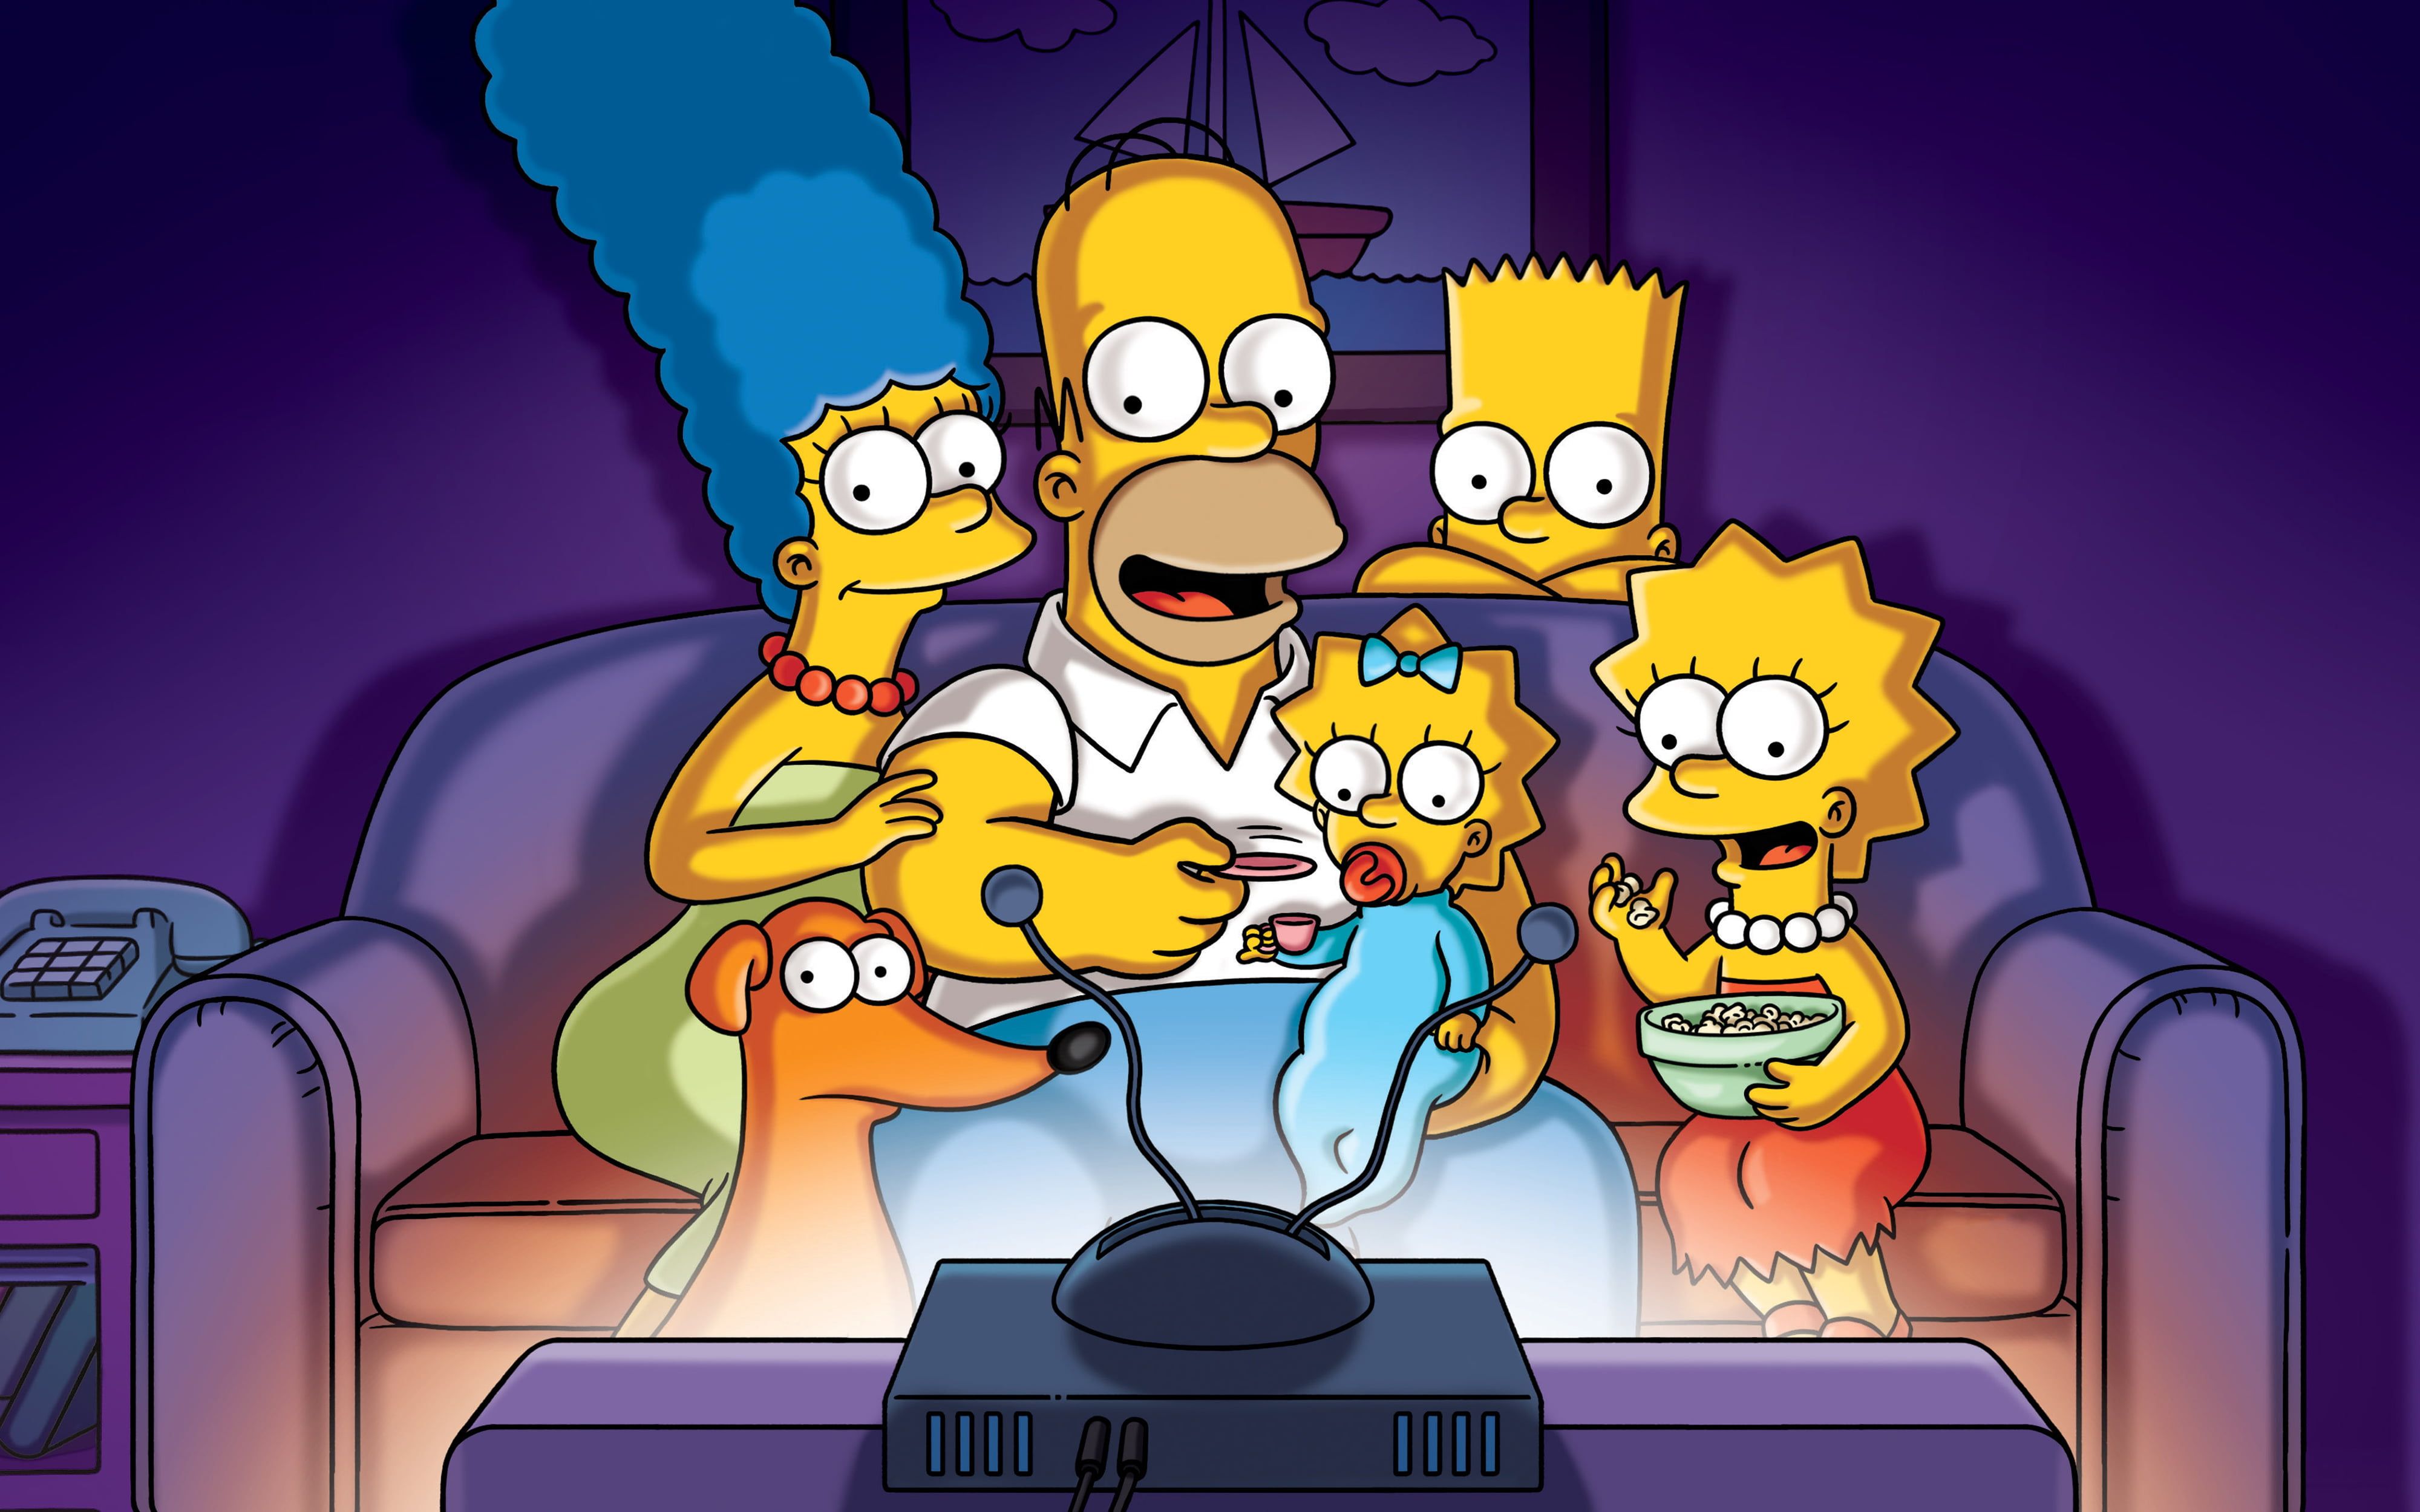 HD wallpaper: The Simpsons, tv series, Homer Simpson, Marge Simpson, Bart Simpson. The simpsons, Homer simpson, Bart simpson